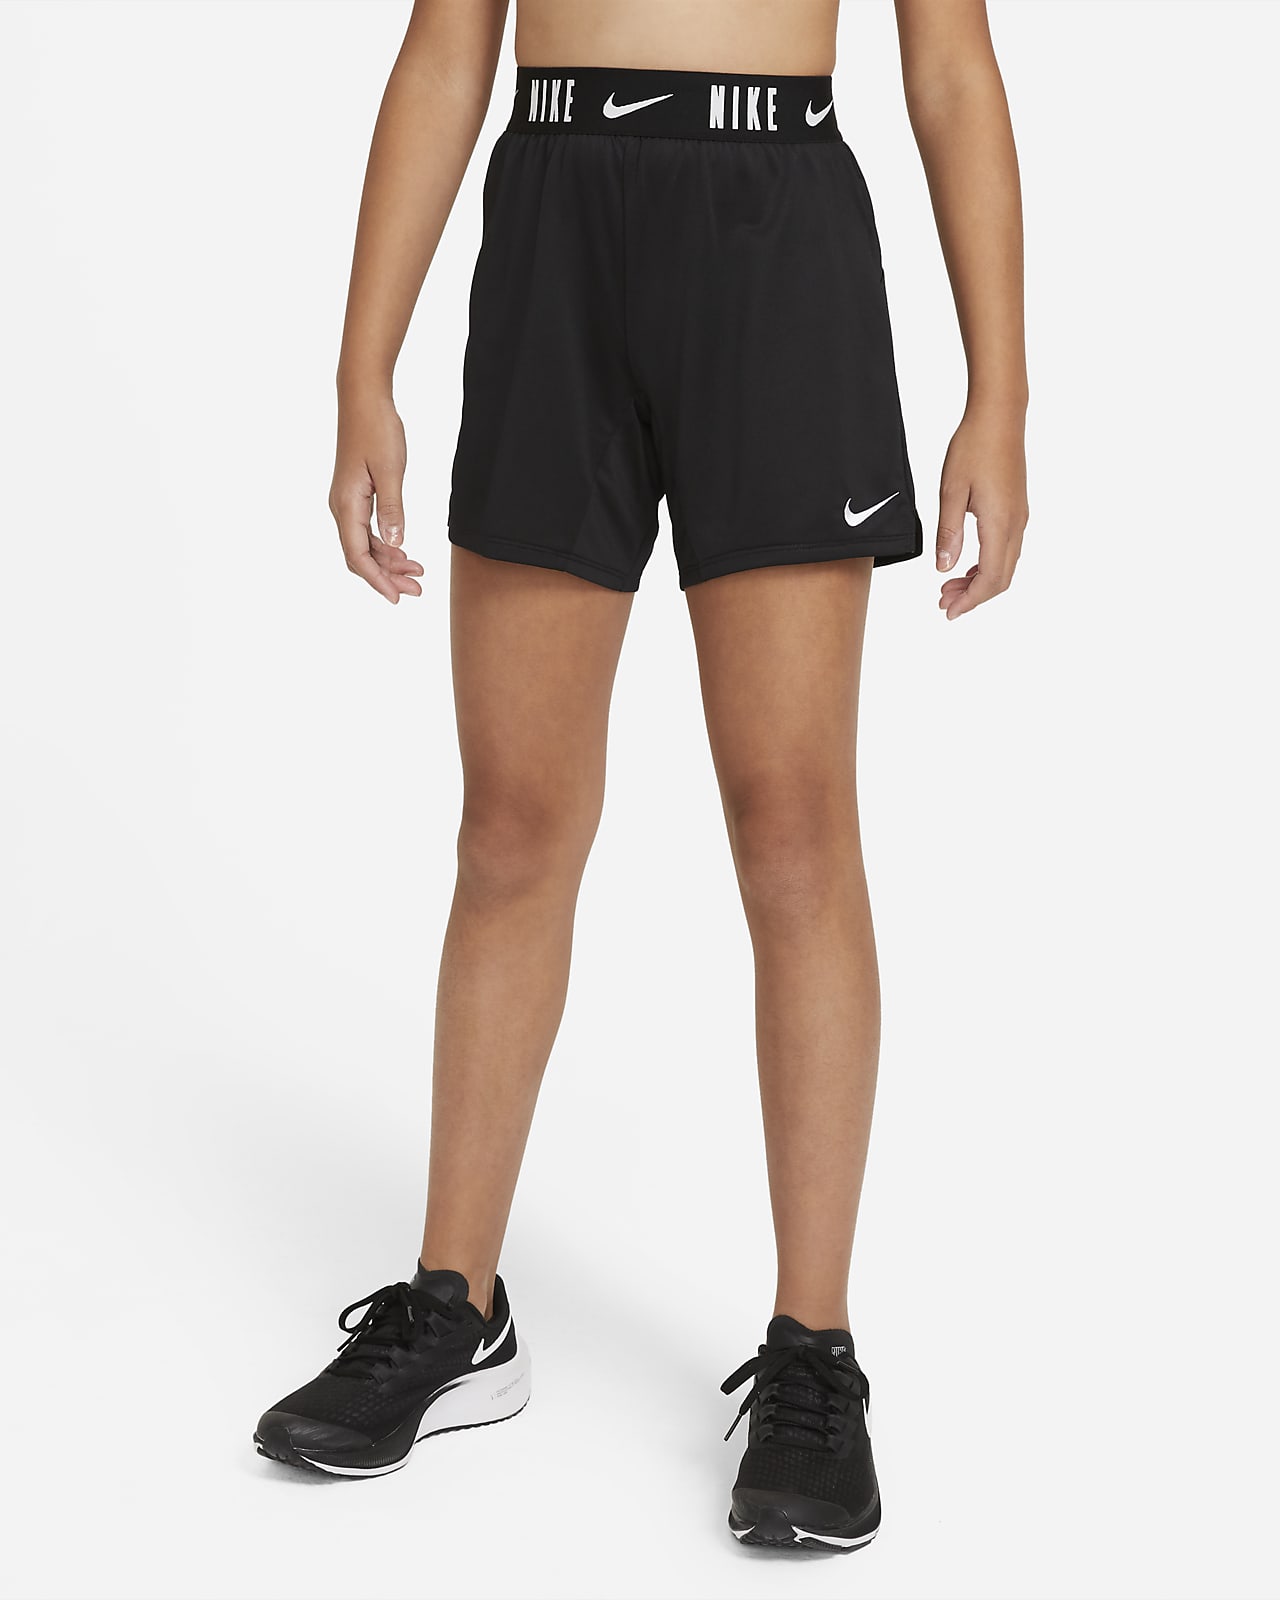 Nike Dri-FIT Trophy Trainingsshorts für ältere Kinder (ca. 15 cm) (Mädchen)